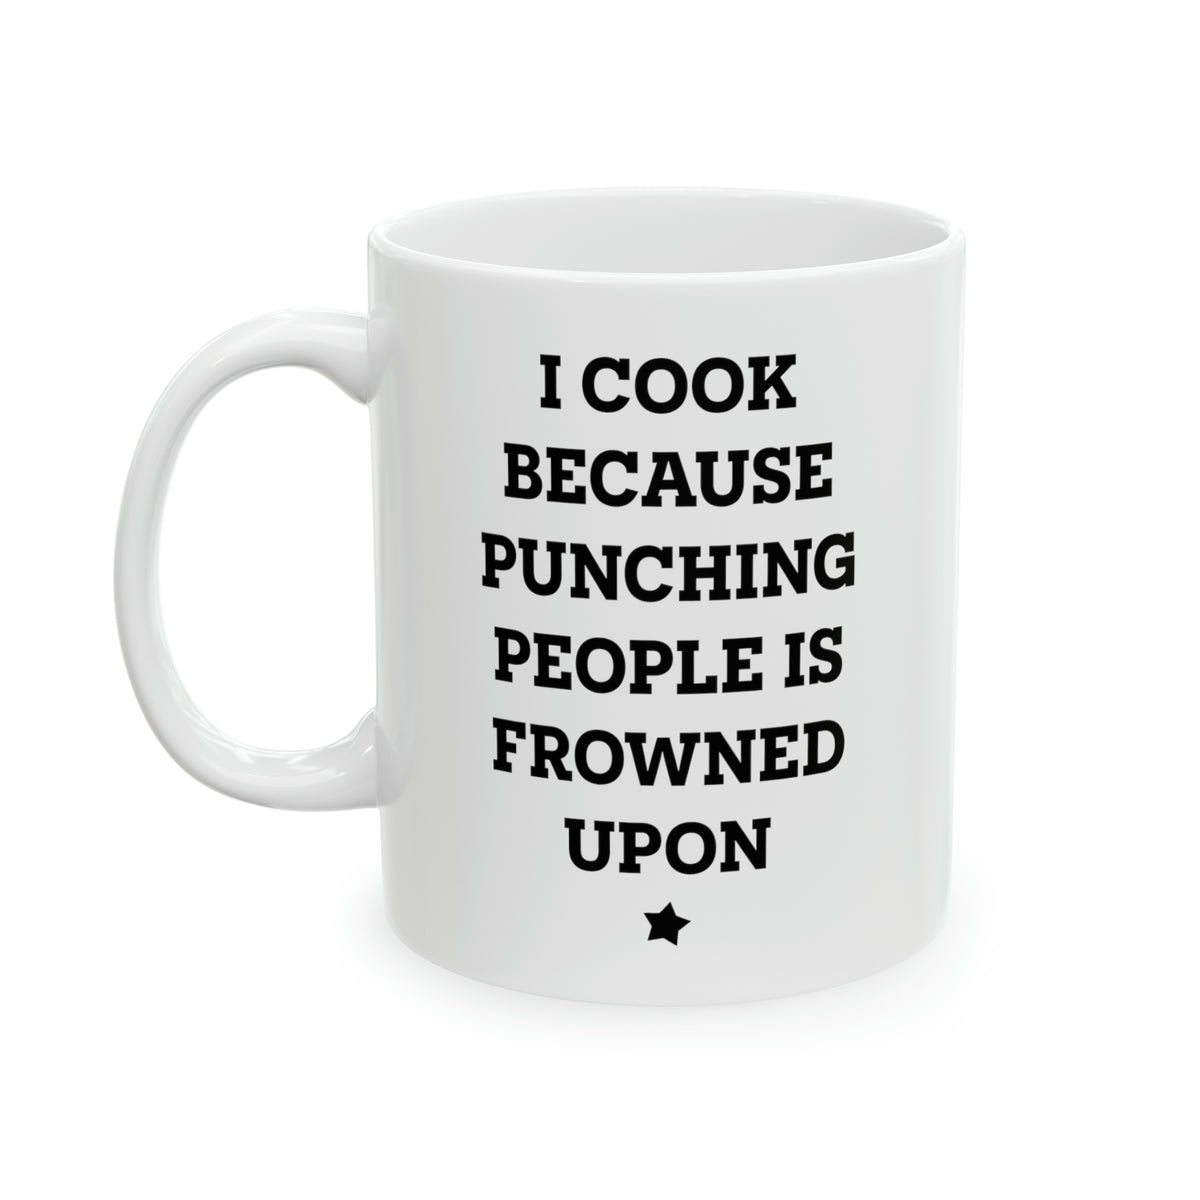 I Cook Because Punching People Is Frowned Upon Coffee Mug - 11oz Mug - Inspiration Gift For Chef